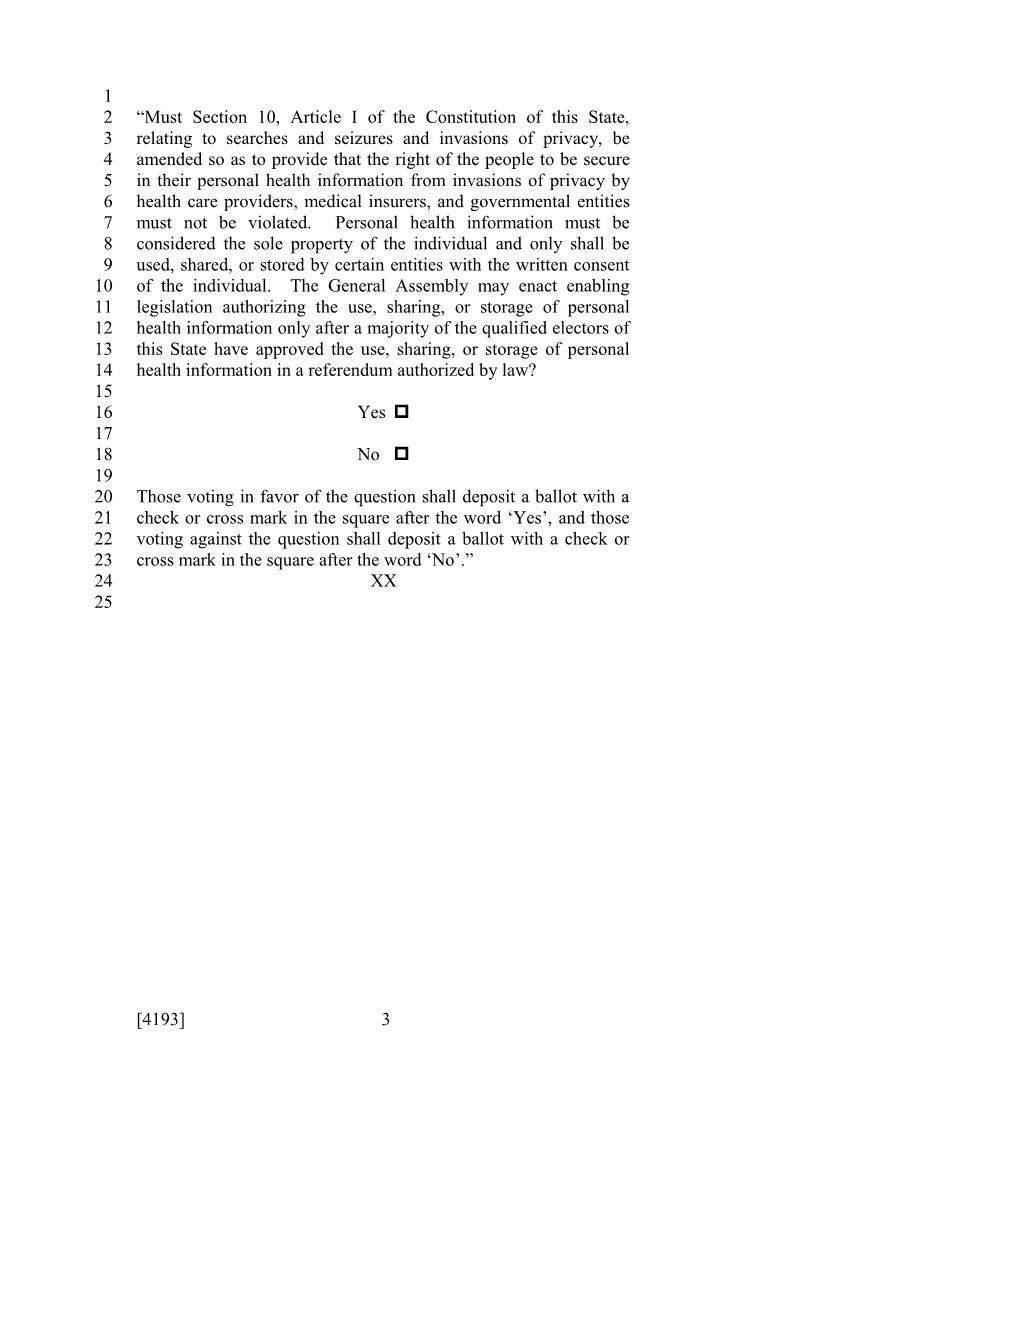 2011-2012 Bill 4193: Searches, Seizures, and Invasions of Privacy - South Carolina Legislature